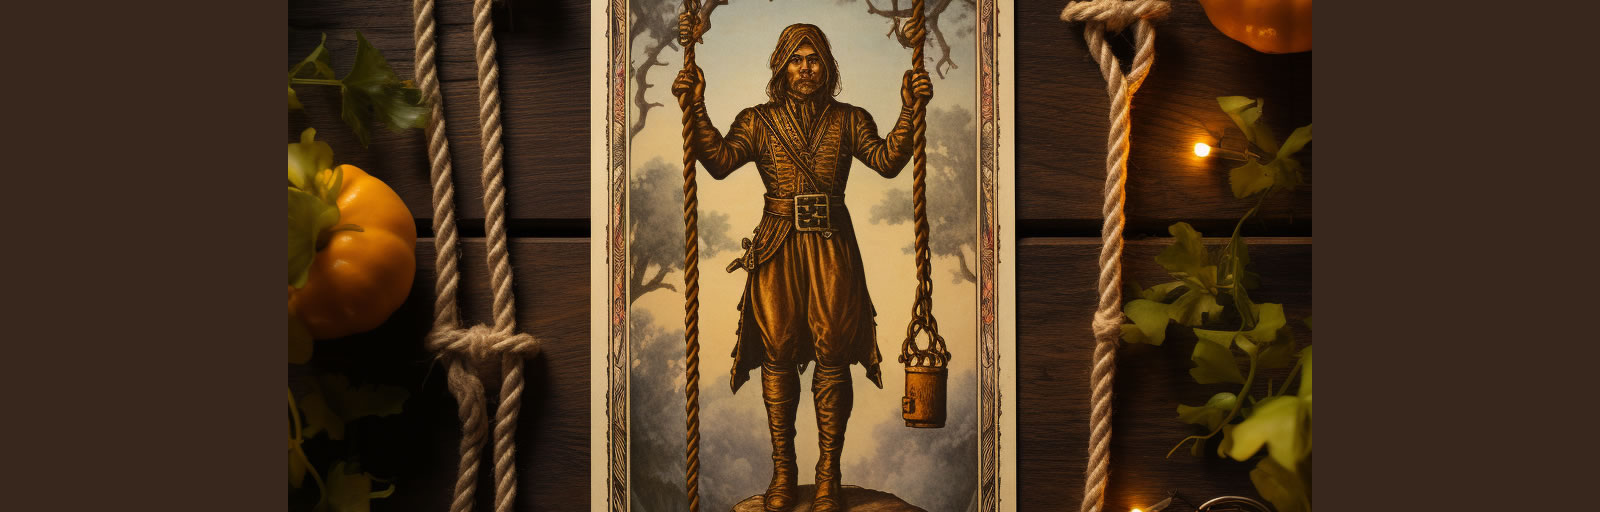 Healing Light, The Hanged Man, Tarot Card, Main image